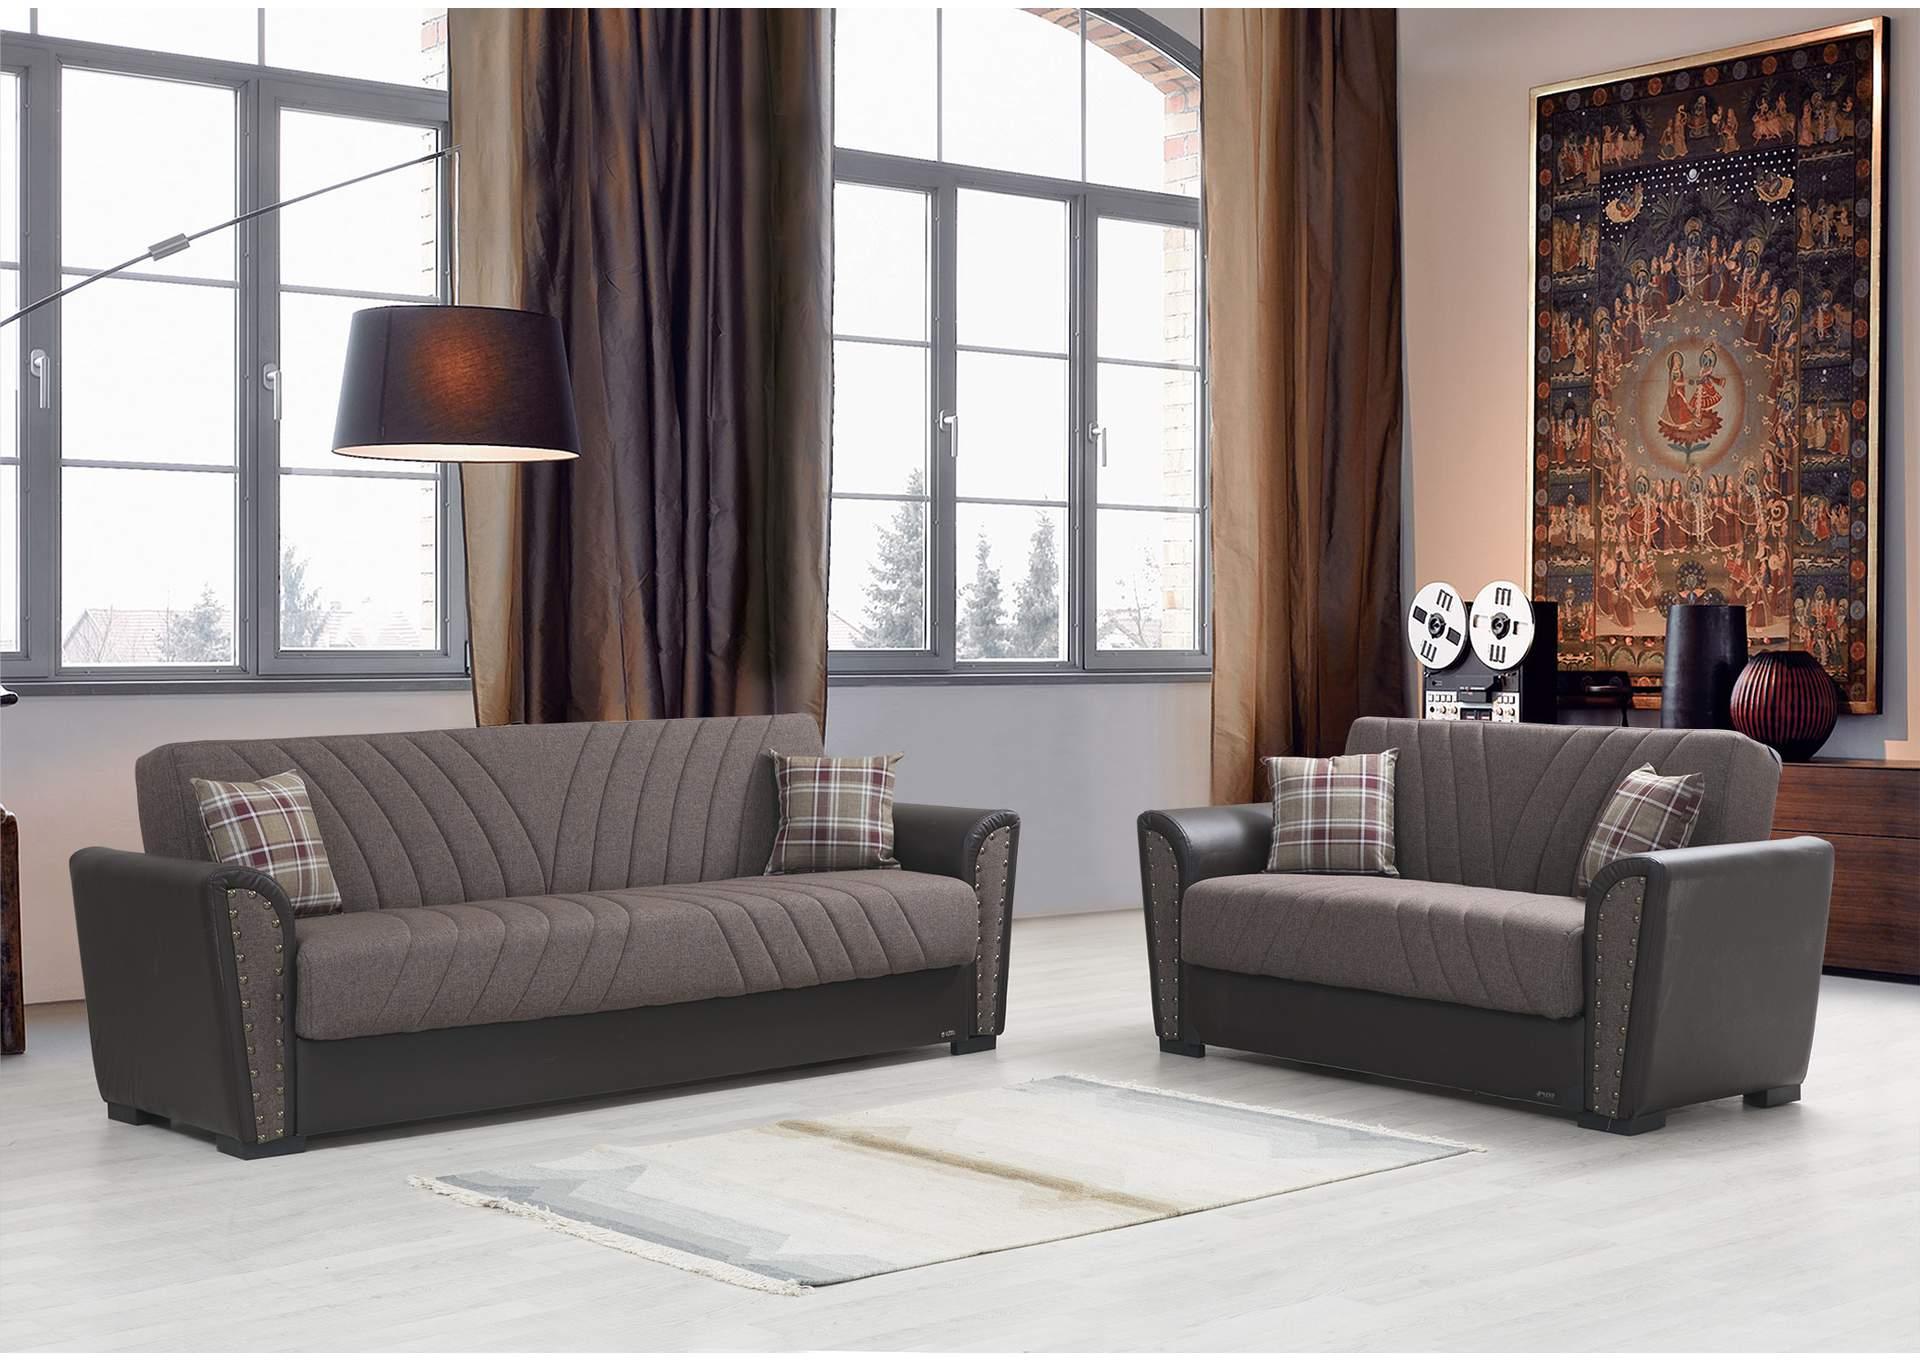 

    
Brown Leather Arm & Brown Fabric Sofa Bed Set 2Pcs Modern Alpha Furniture Salinas
